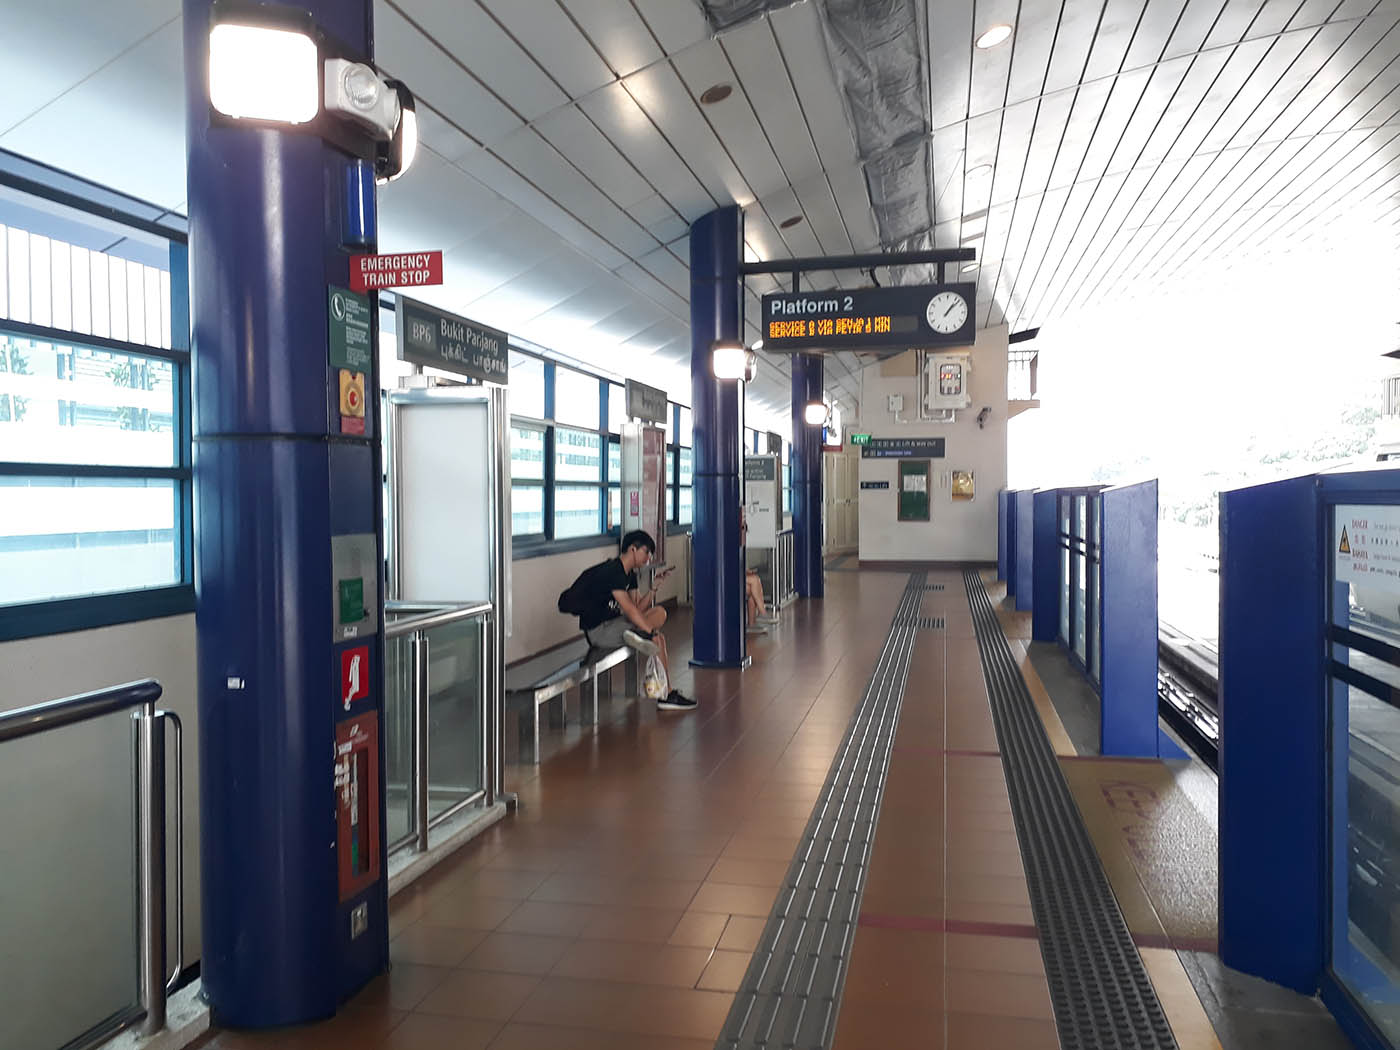 Bukit Panjang MRT Station - - BP6 LRT Station Platform 2